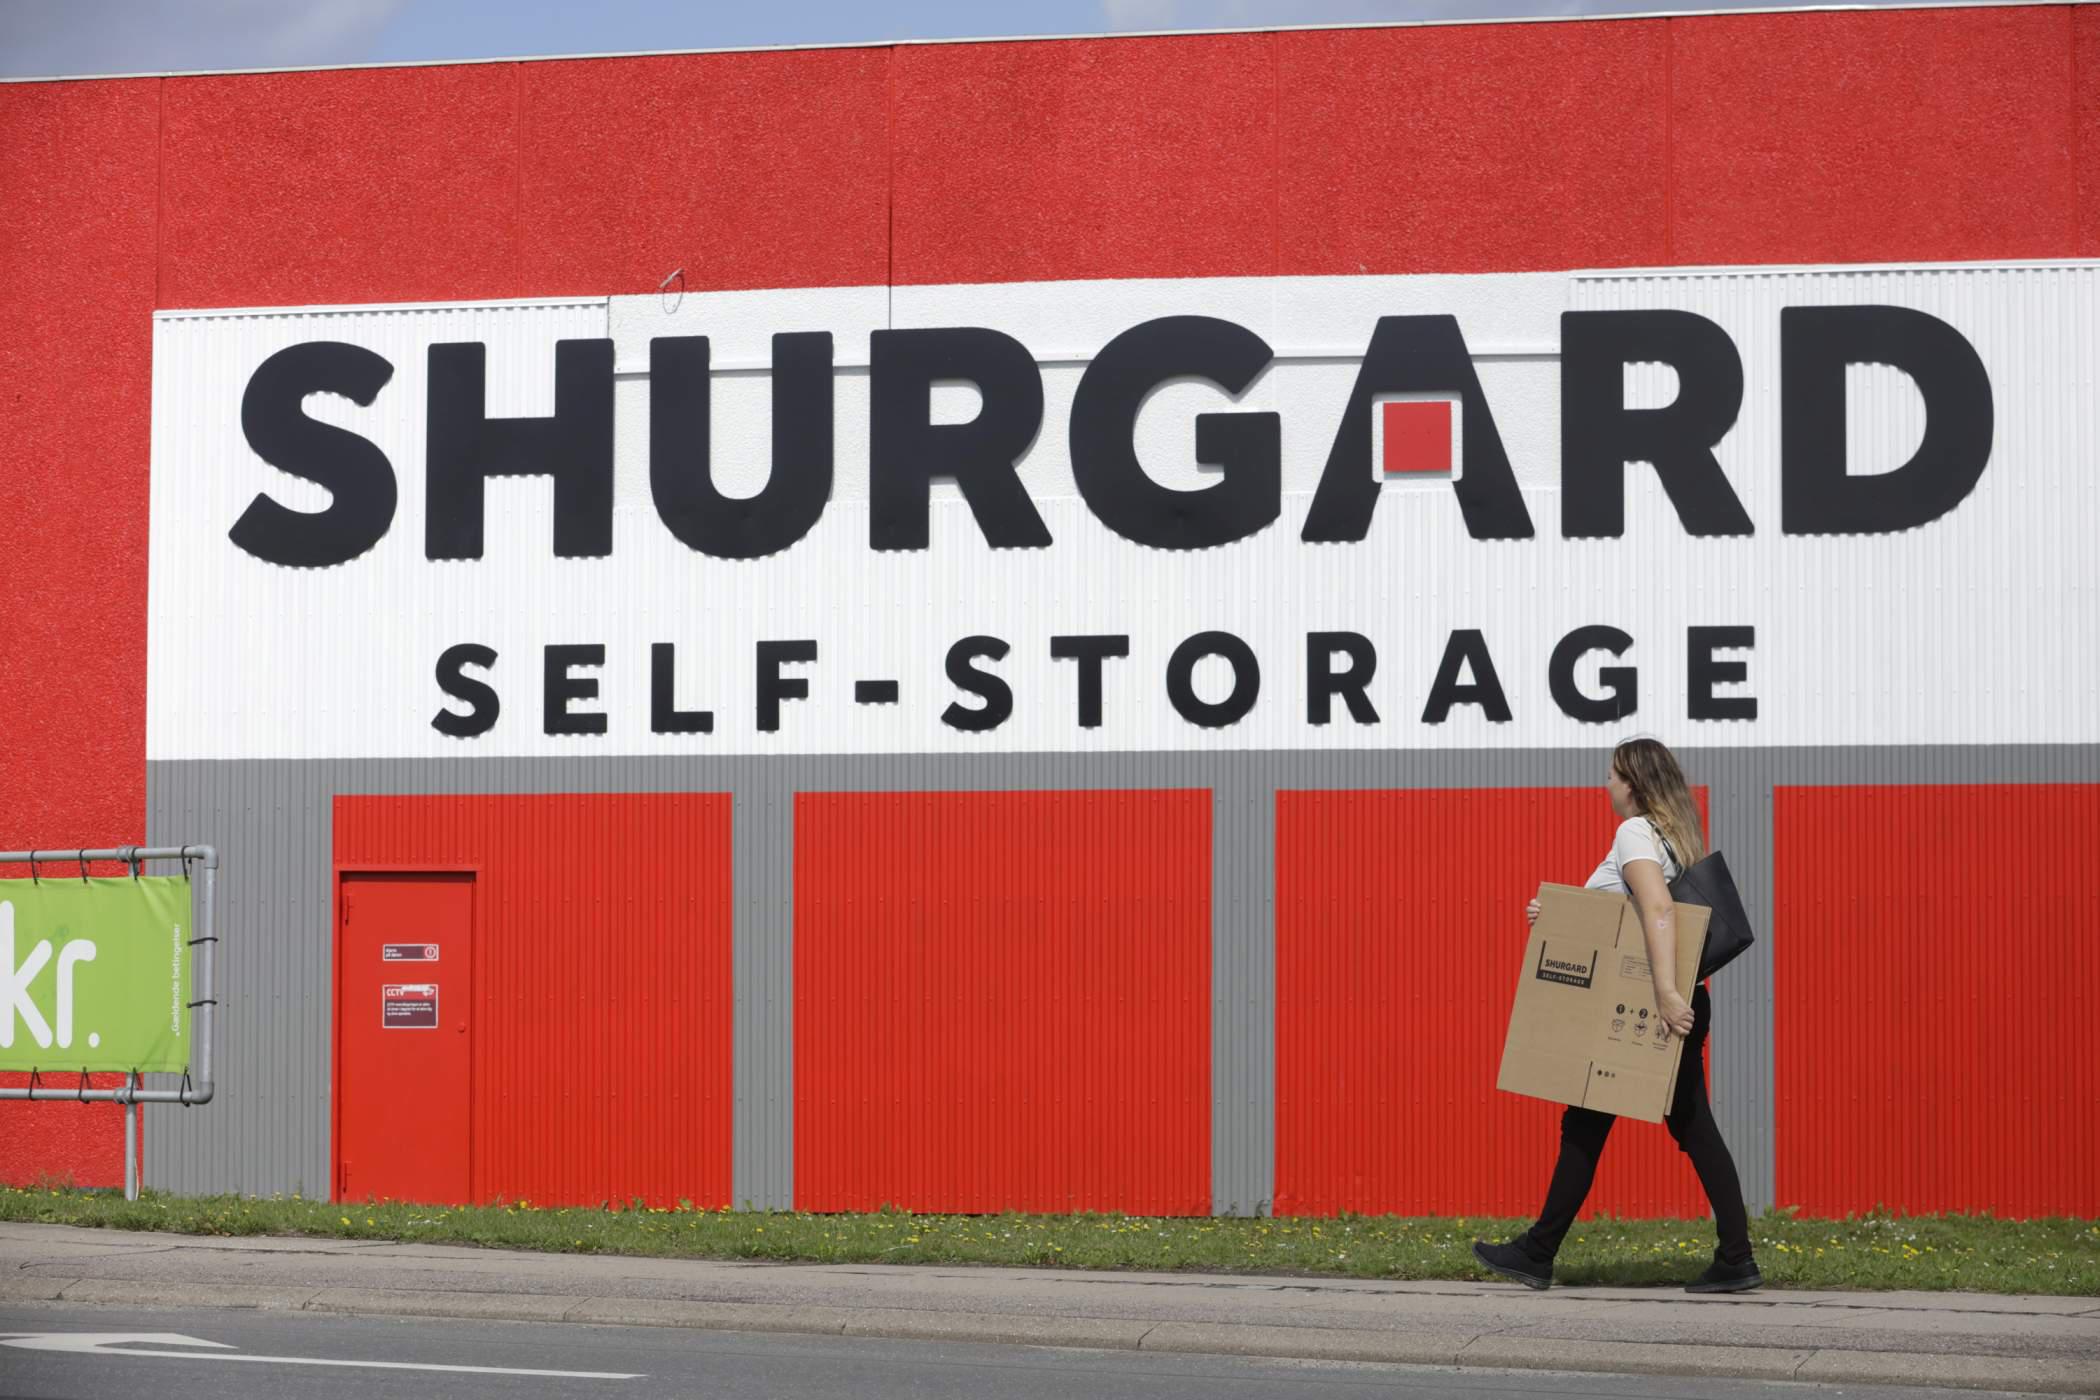 Images Shurgard Self Storage Ishøj